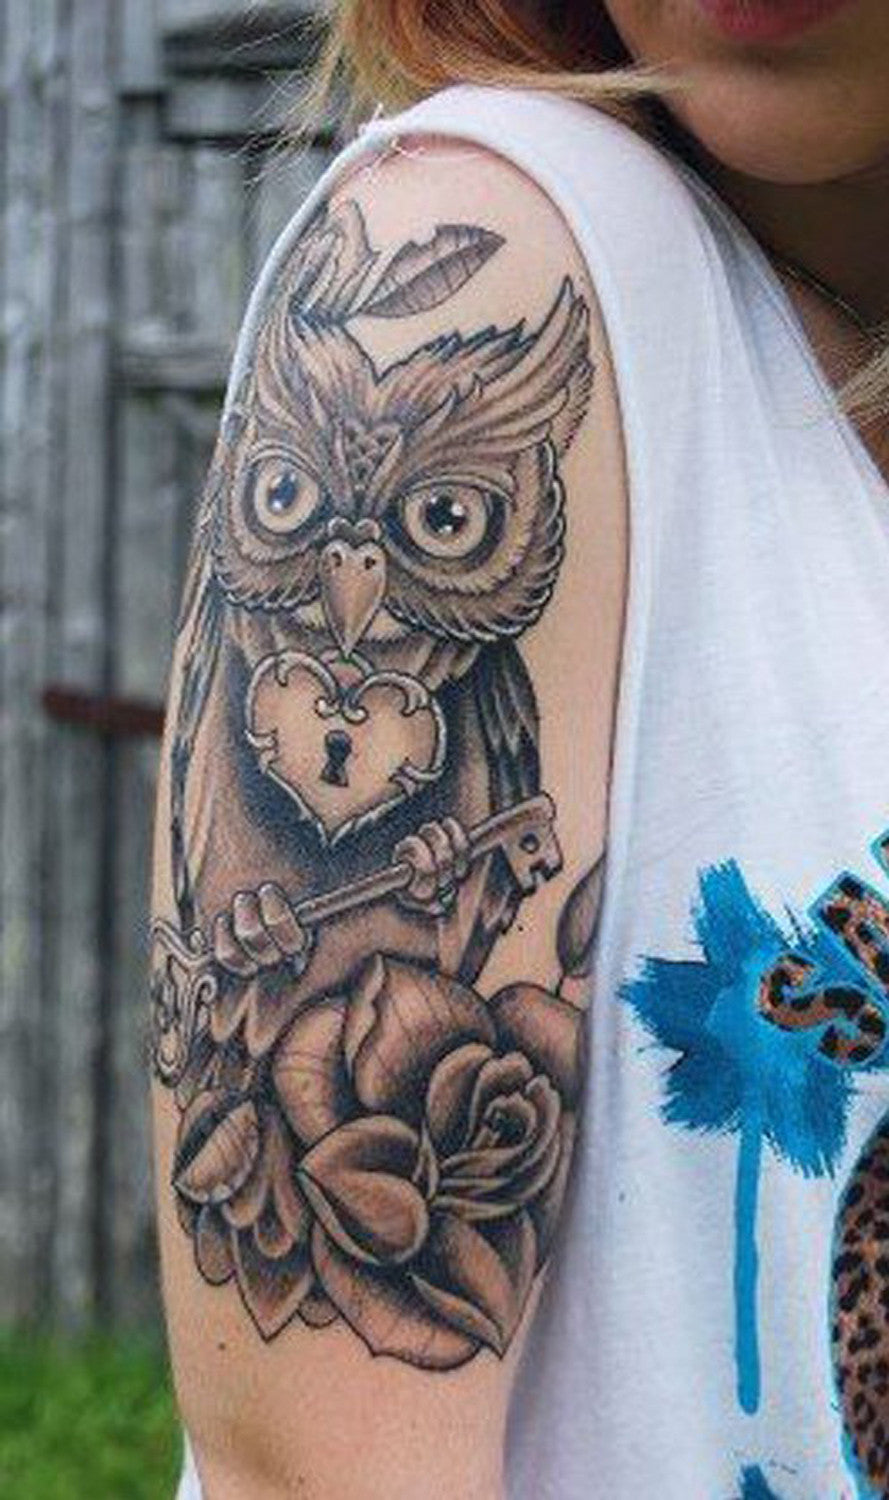 Large Geometric Barn Owl Arm Sleeve Tattoo Ideas for Women - MyBodiArt.com 